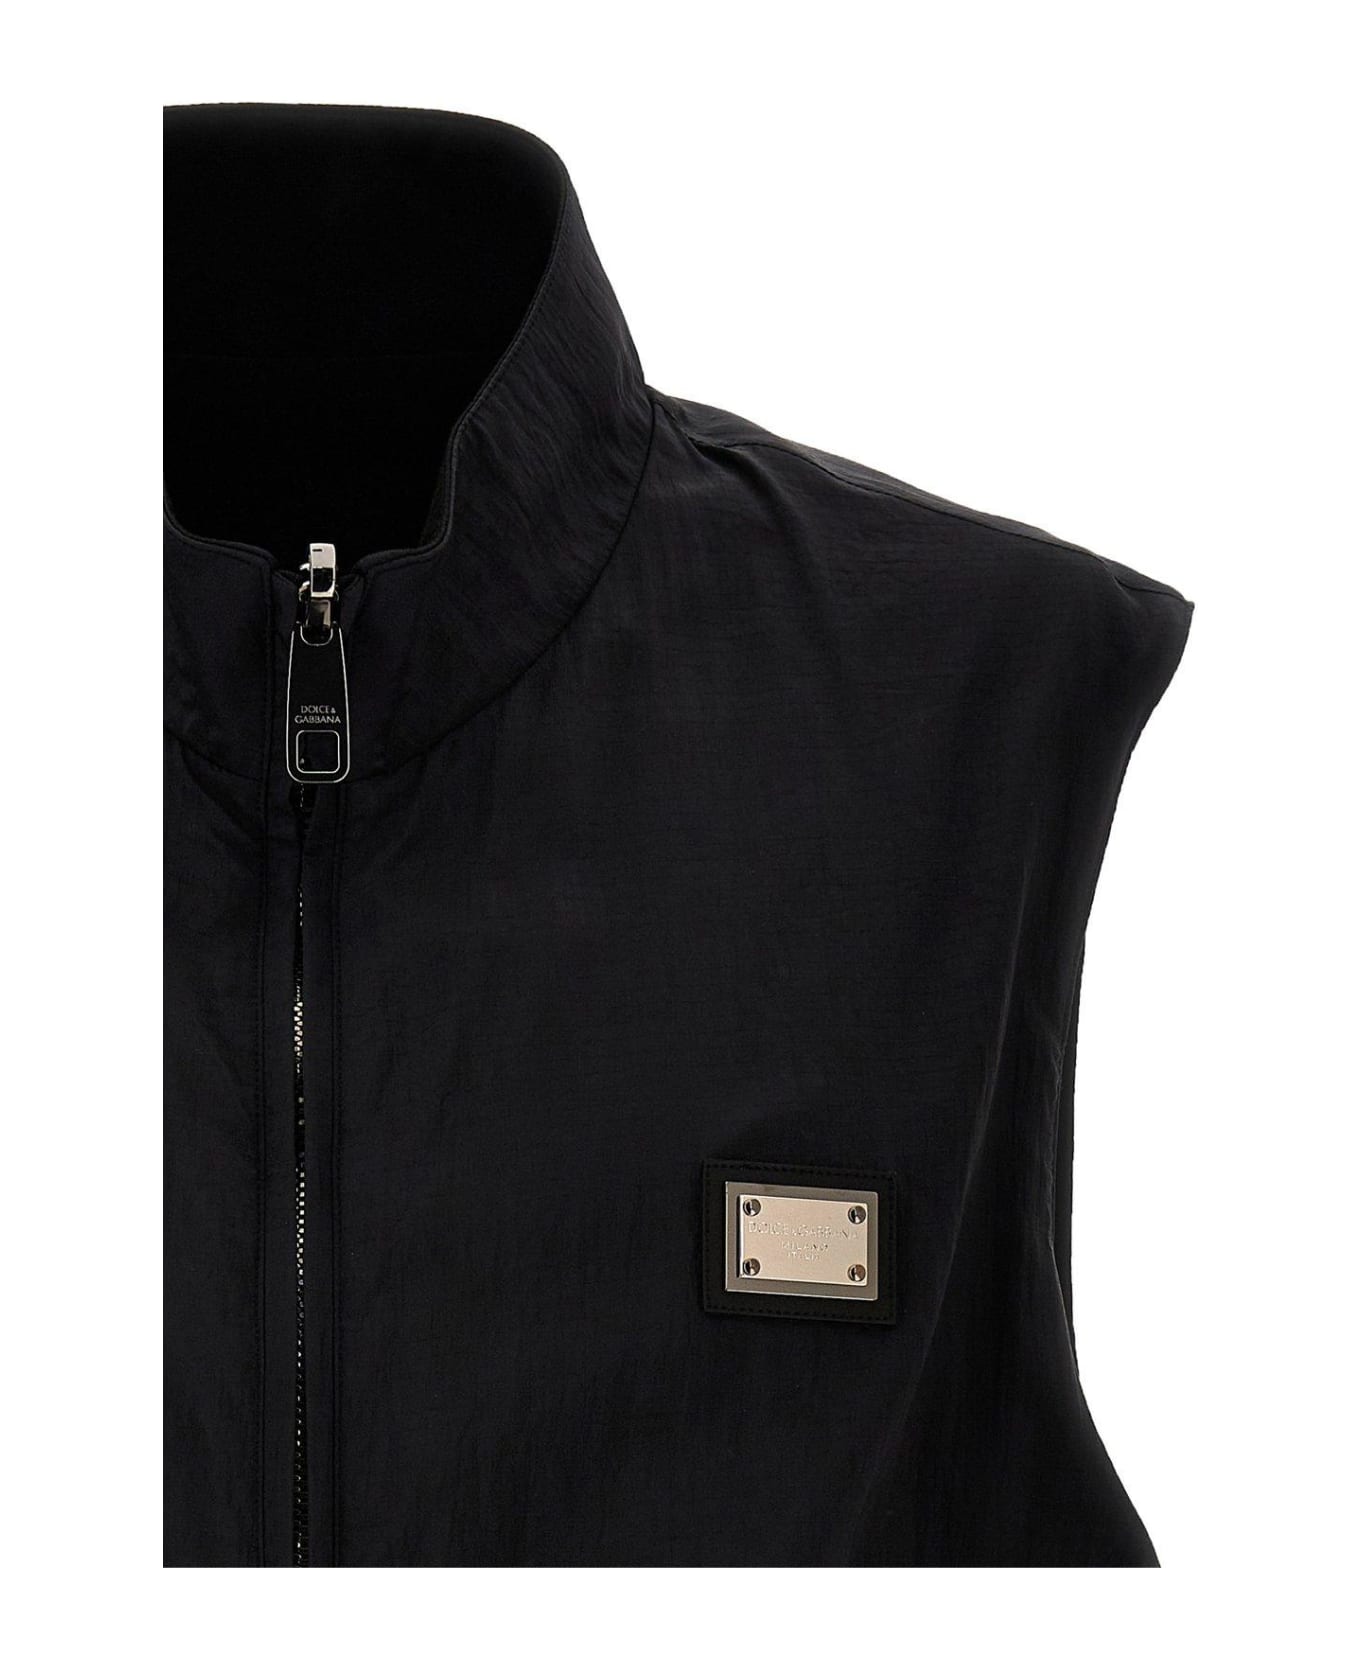 Dolce & Gabbana Logo Reversible Vest - Black